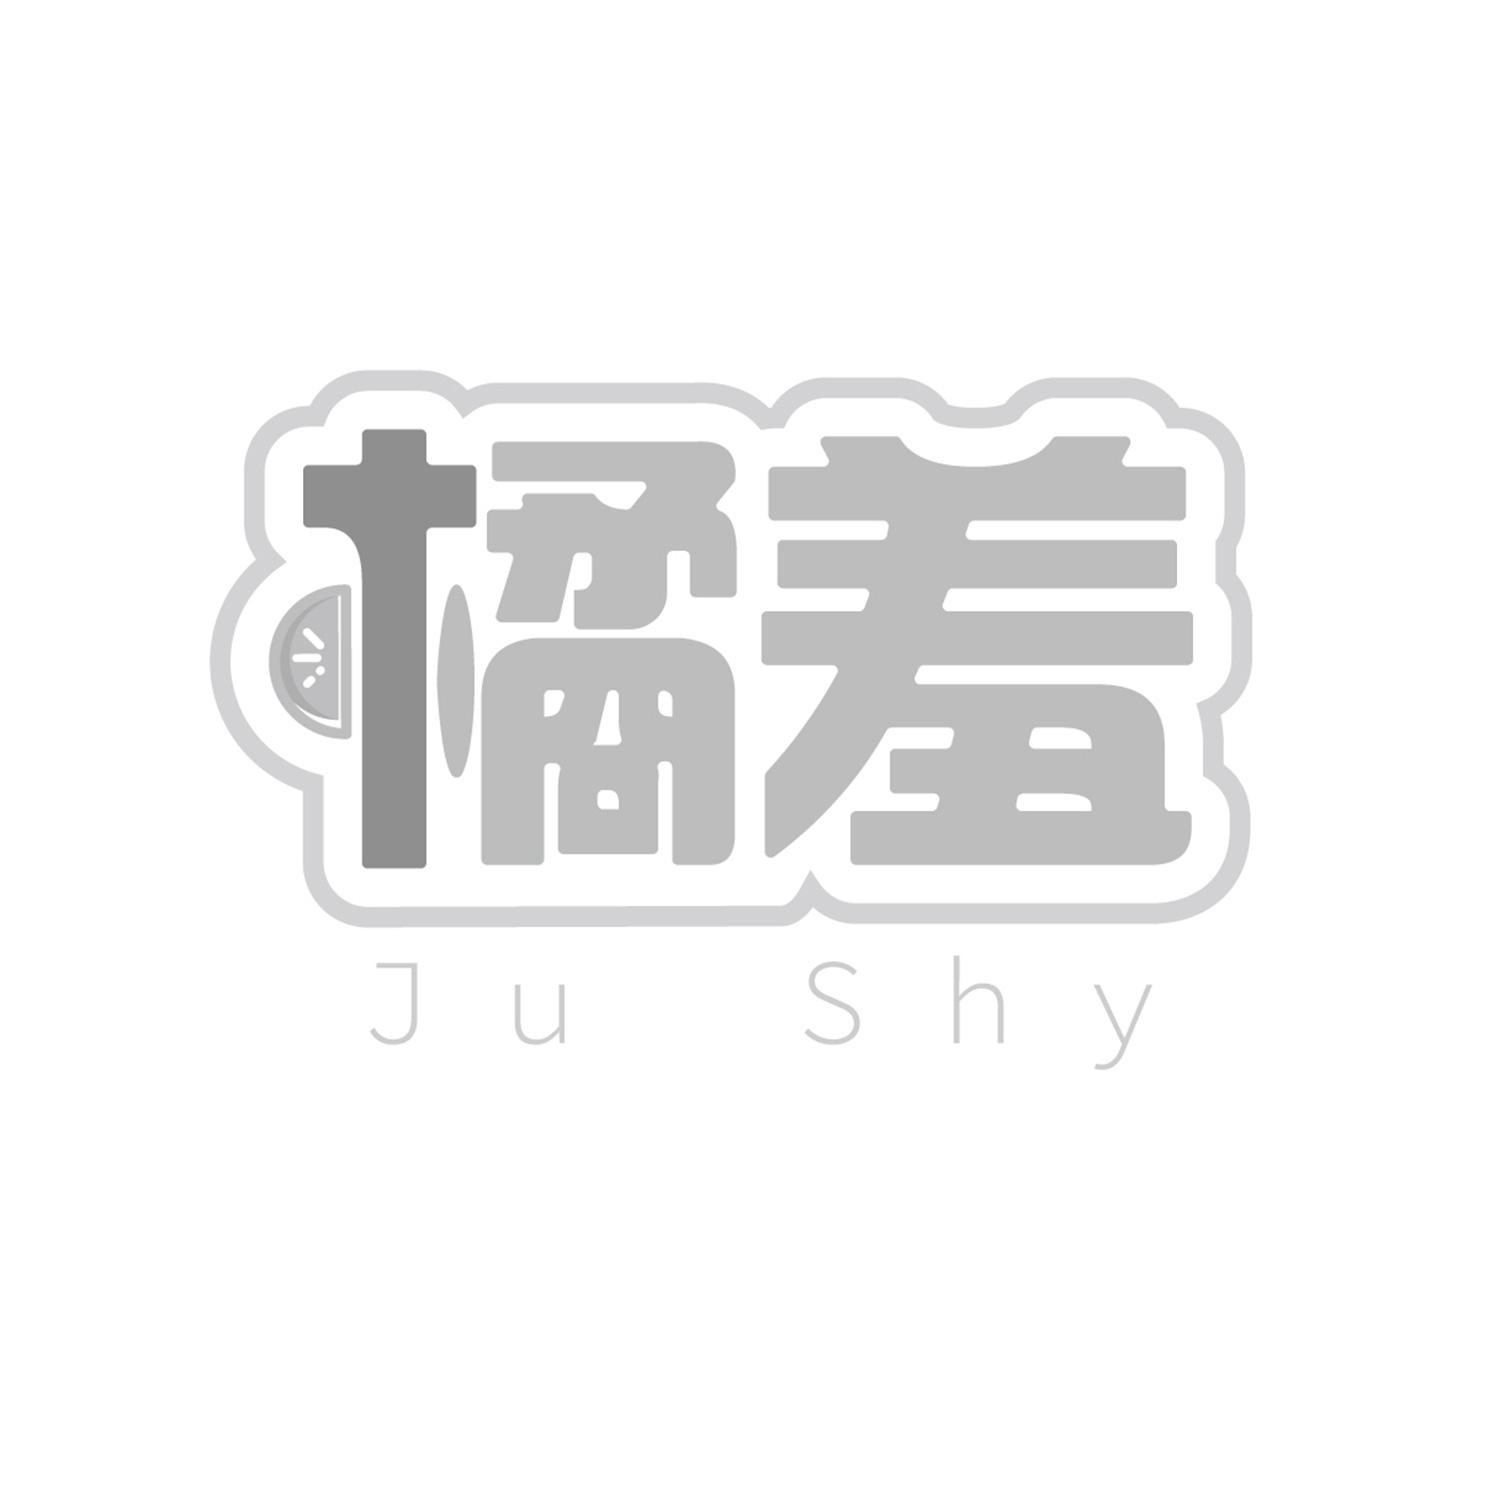  JU SHY